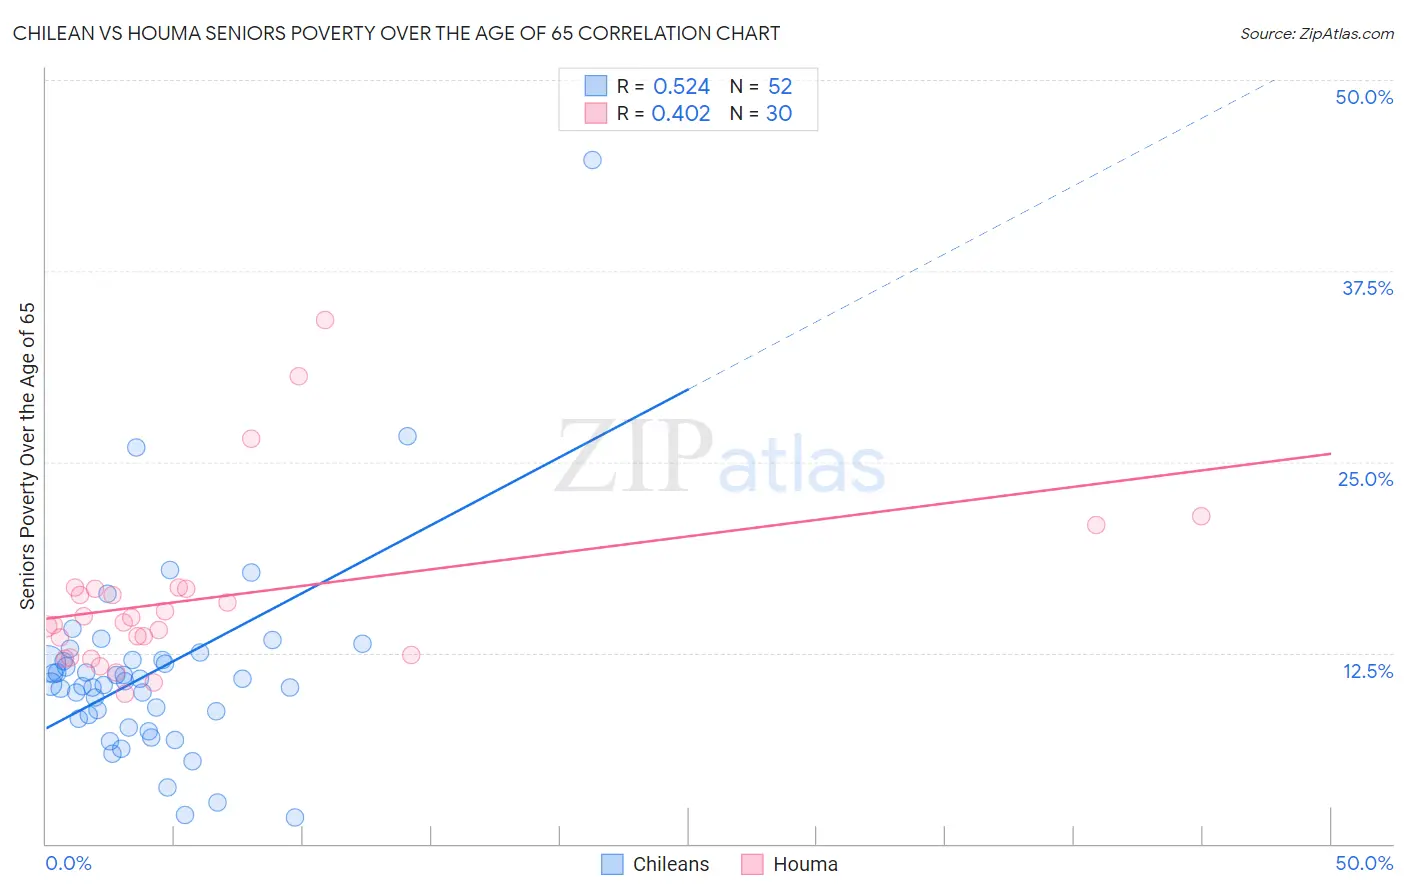 Chilean vs Houma Seniors Poverty Over the Age of 65